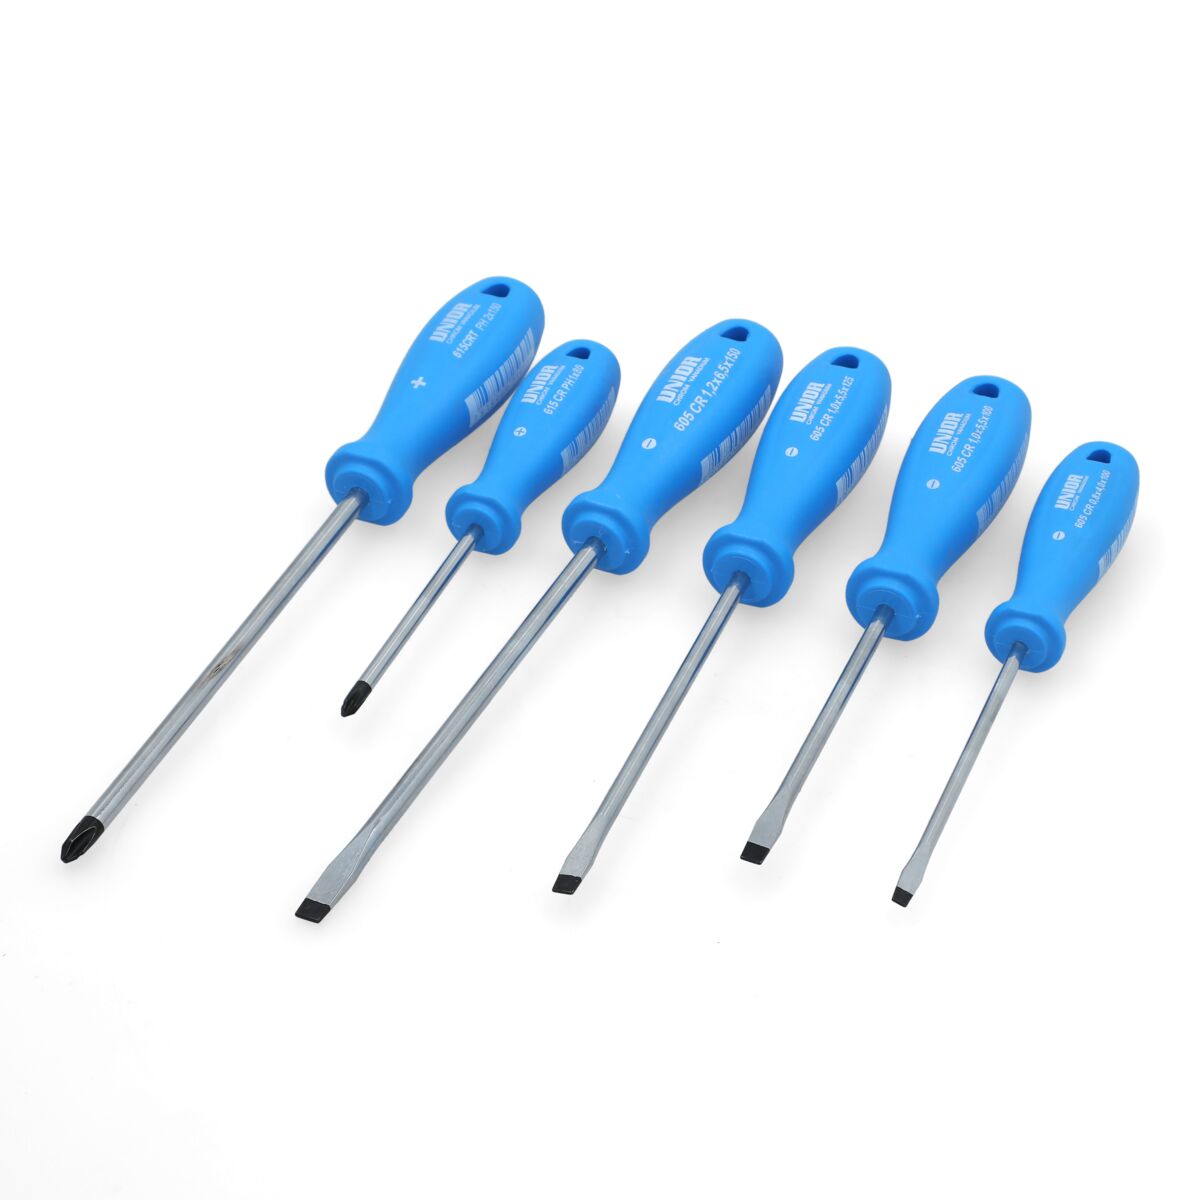 Unior screwdriver set of 6 pieces | حلول متقدمة للعدد| Advanced solutions for tools